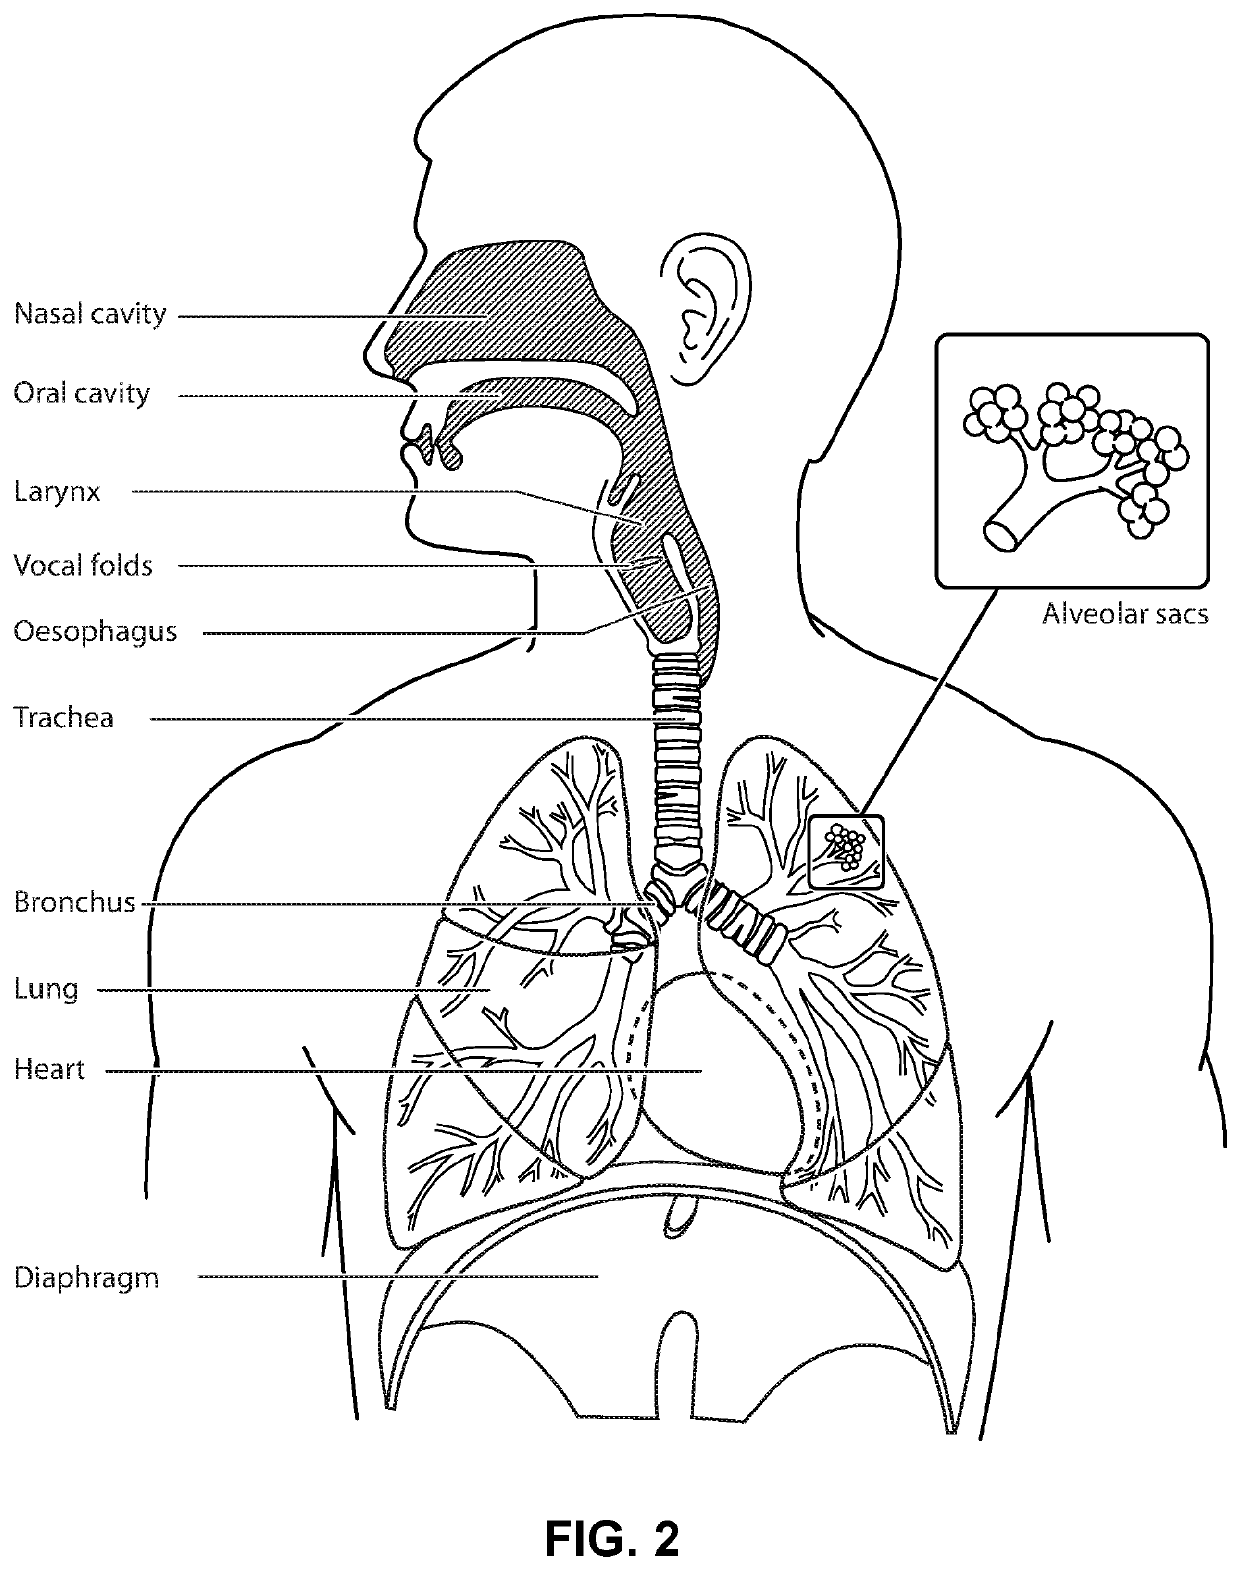 Diagnosis and monitoring of cardio-respiratory disorders